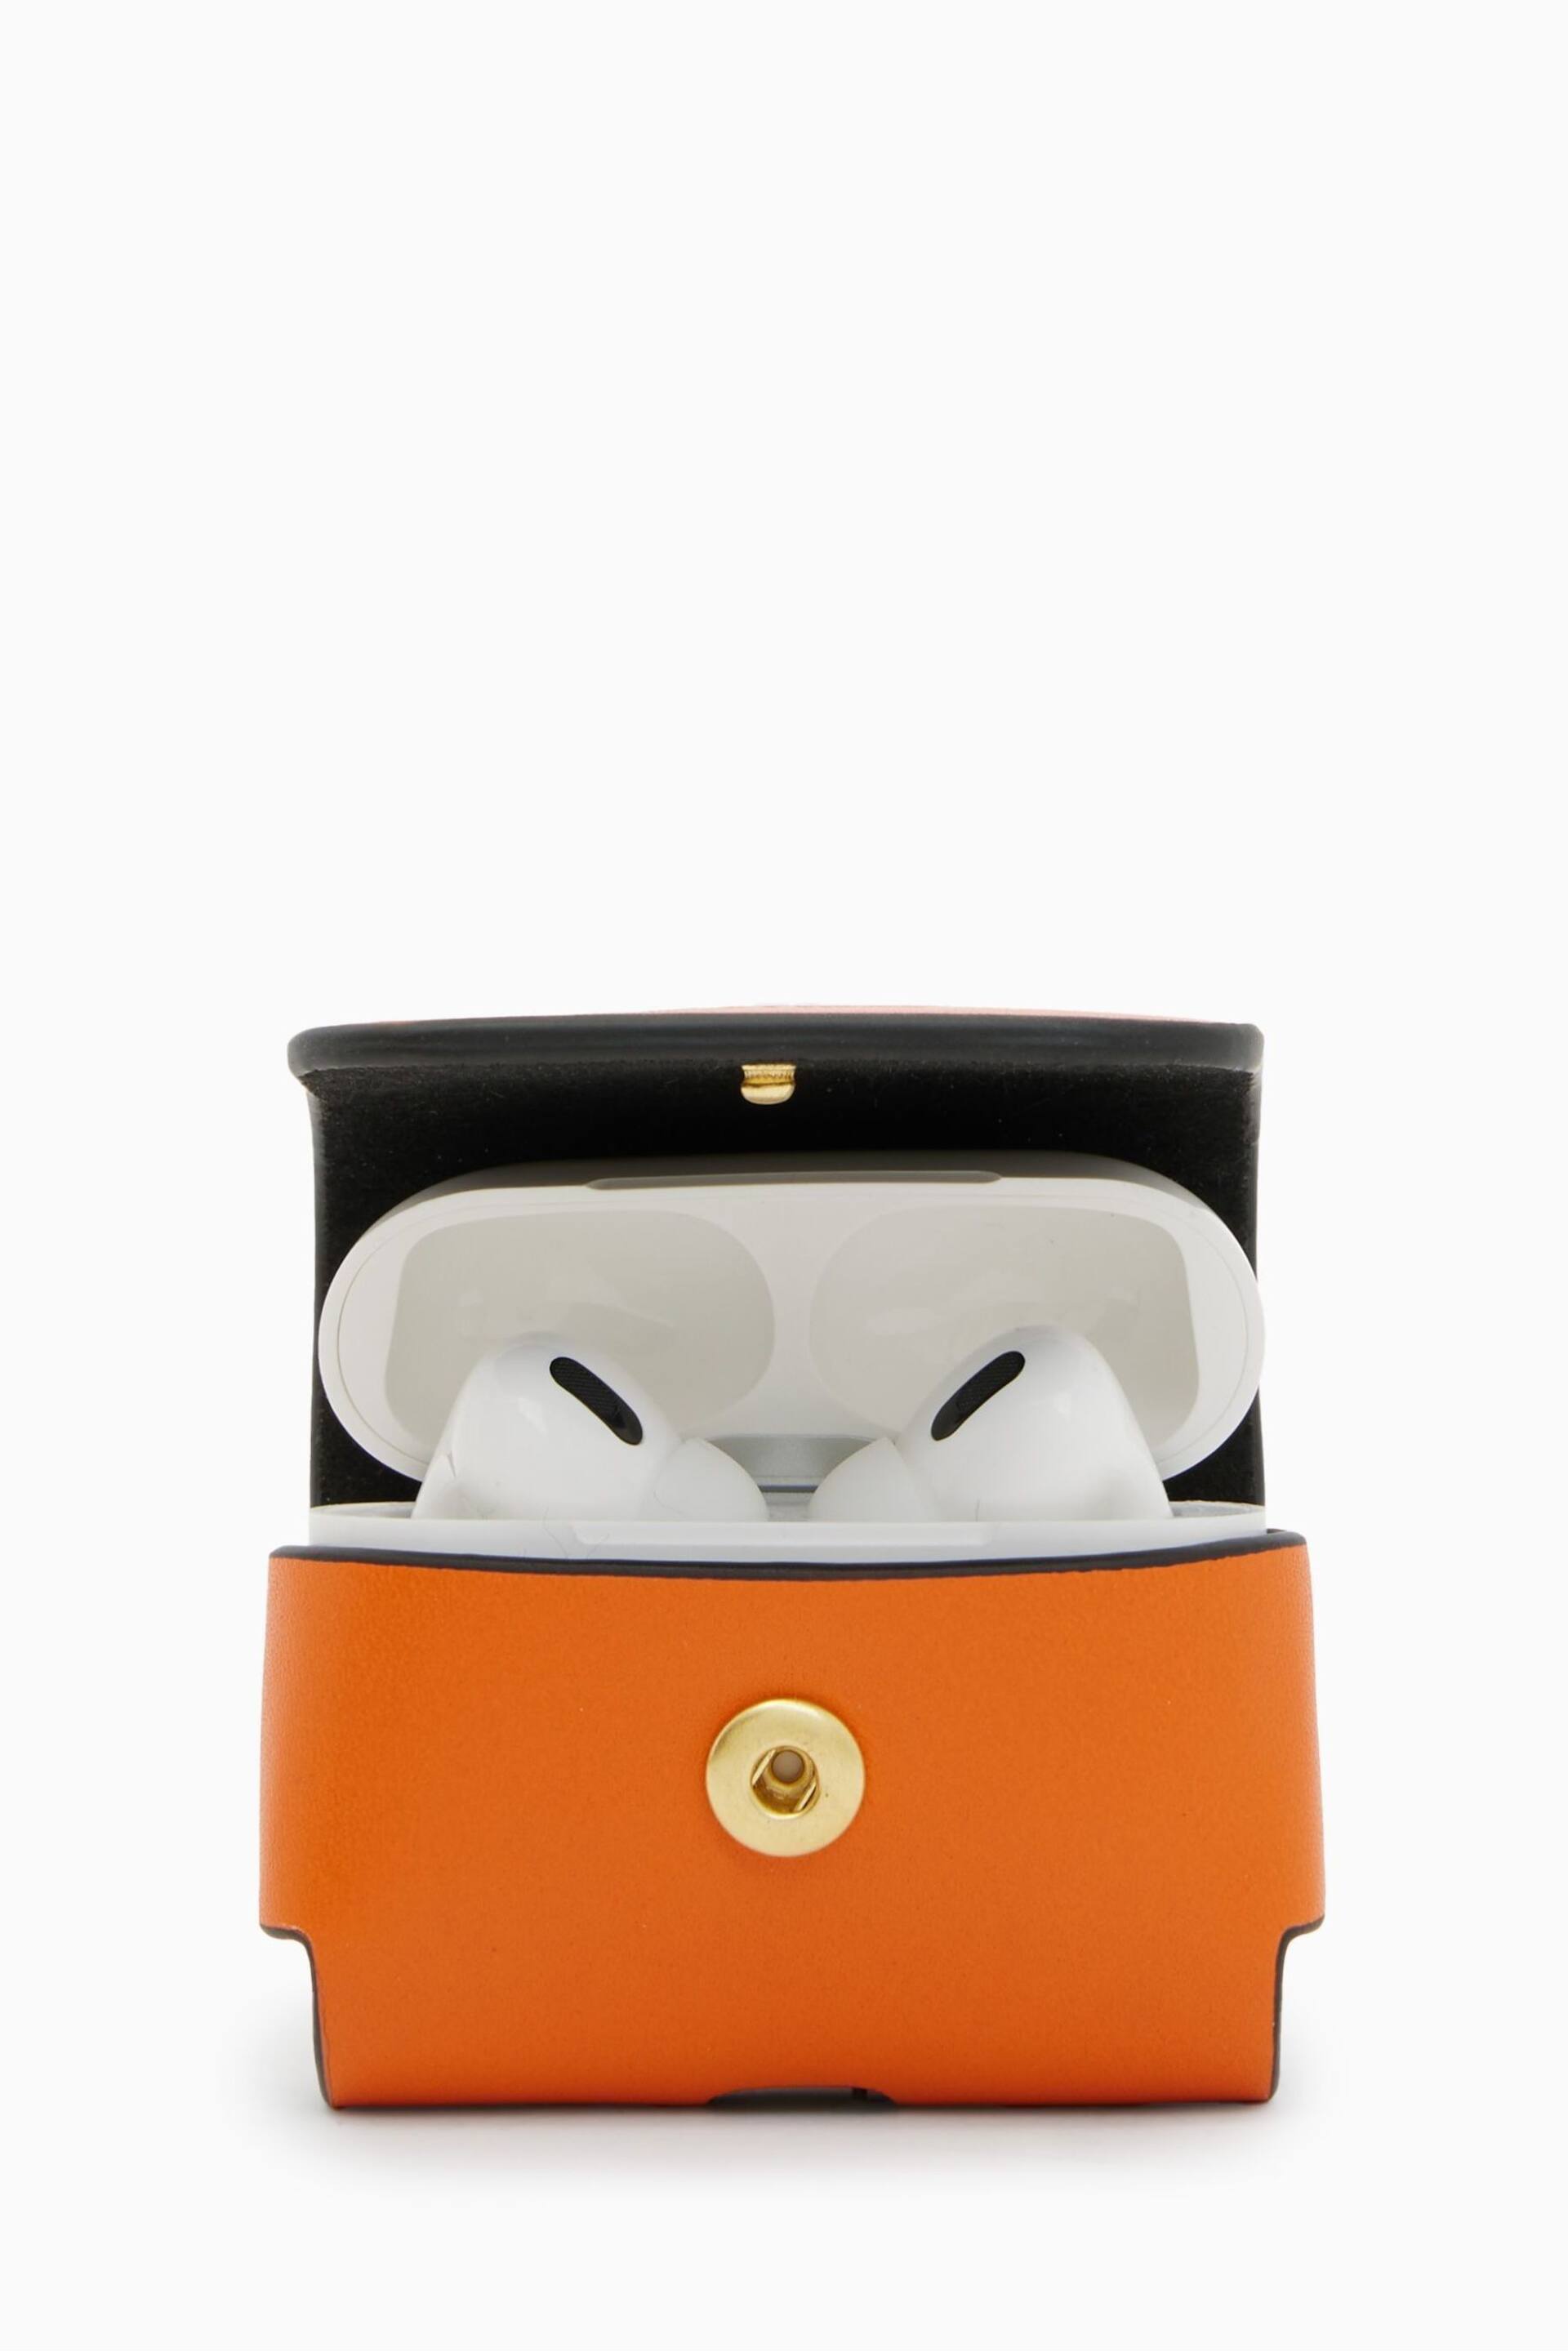 AllSaints Orange Airpod Case - Image 4 of 5